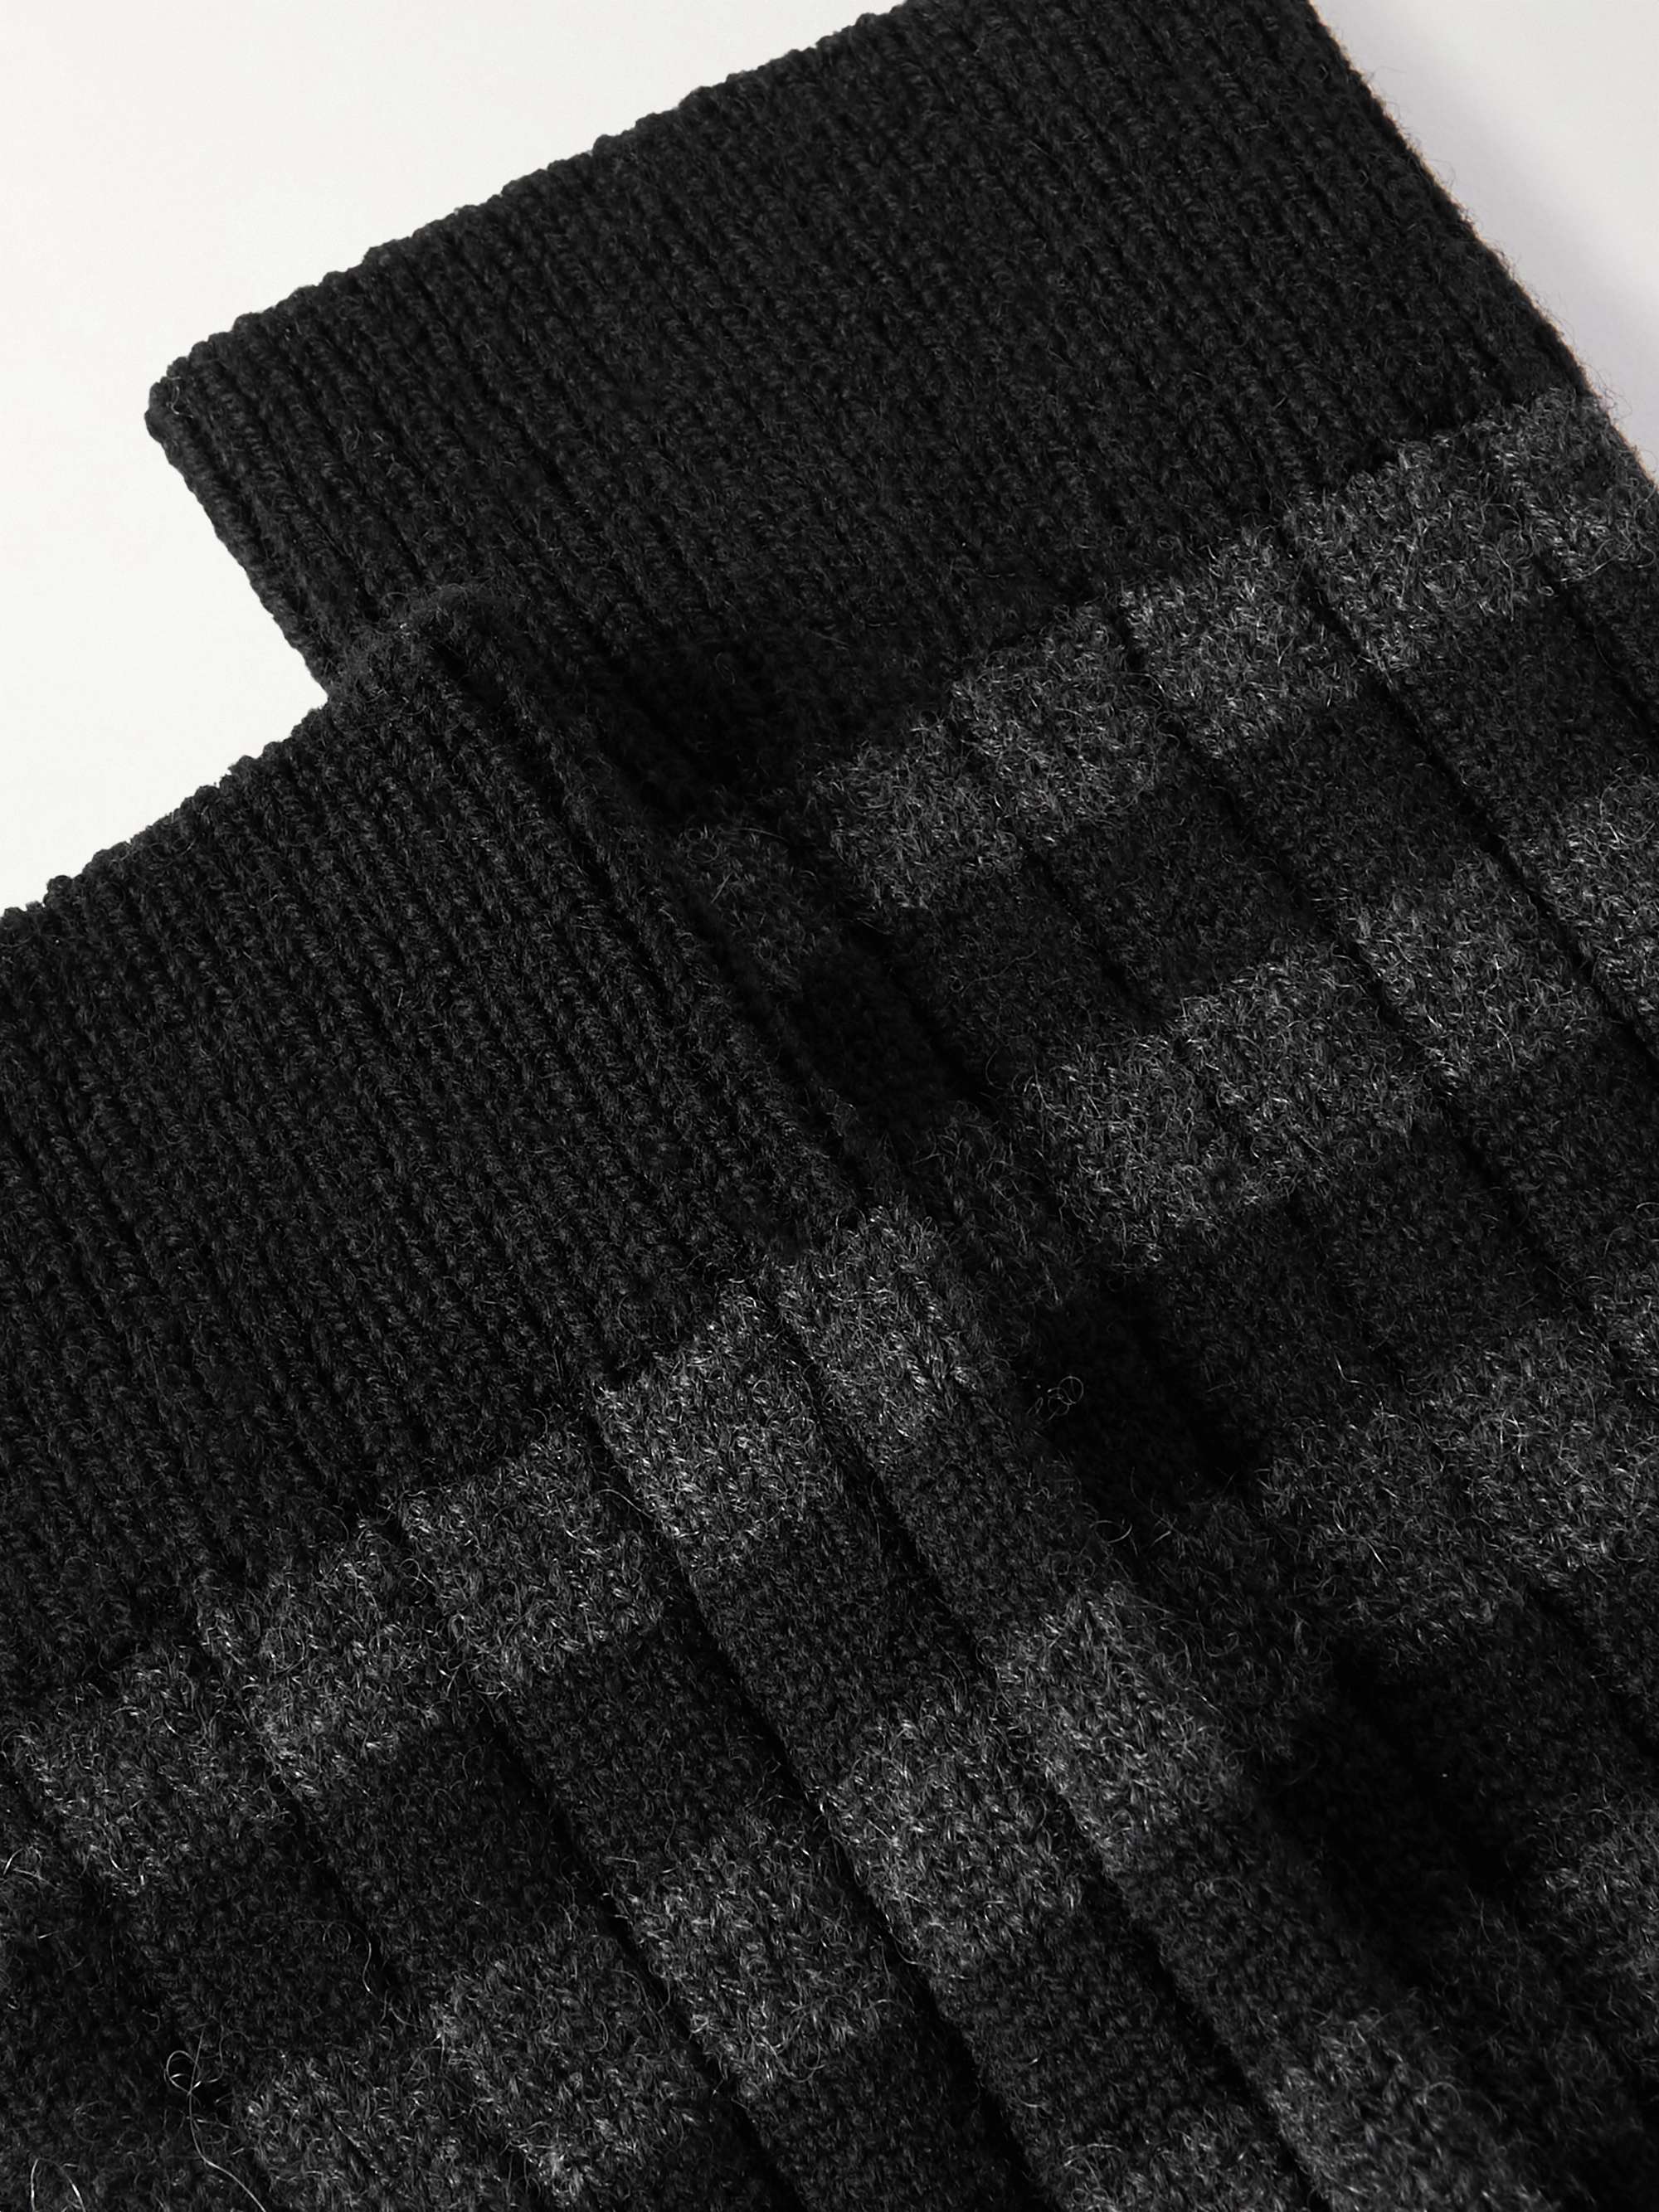 WILLIAM LOCKIE Striped Ribbed Cashmere-Blend Socks